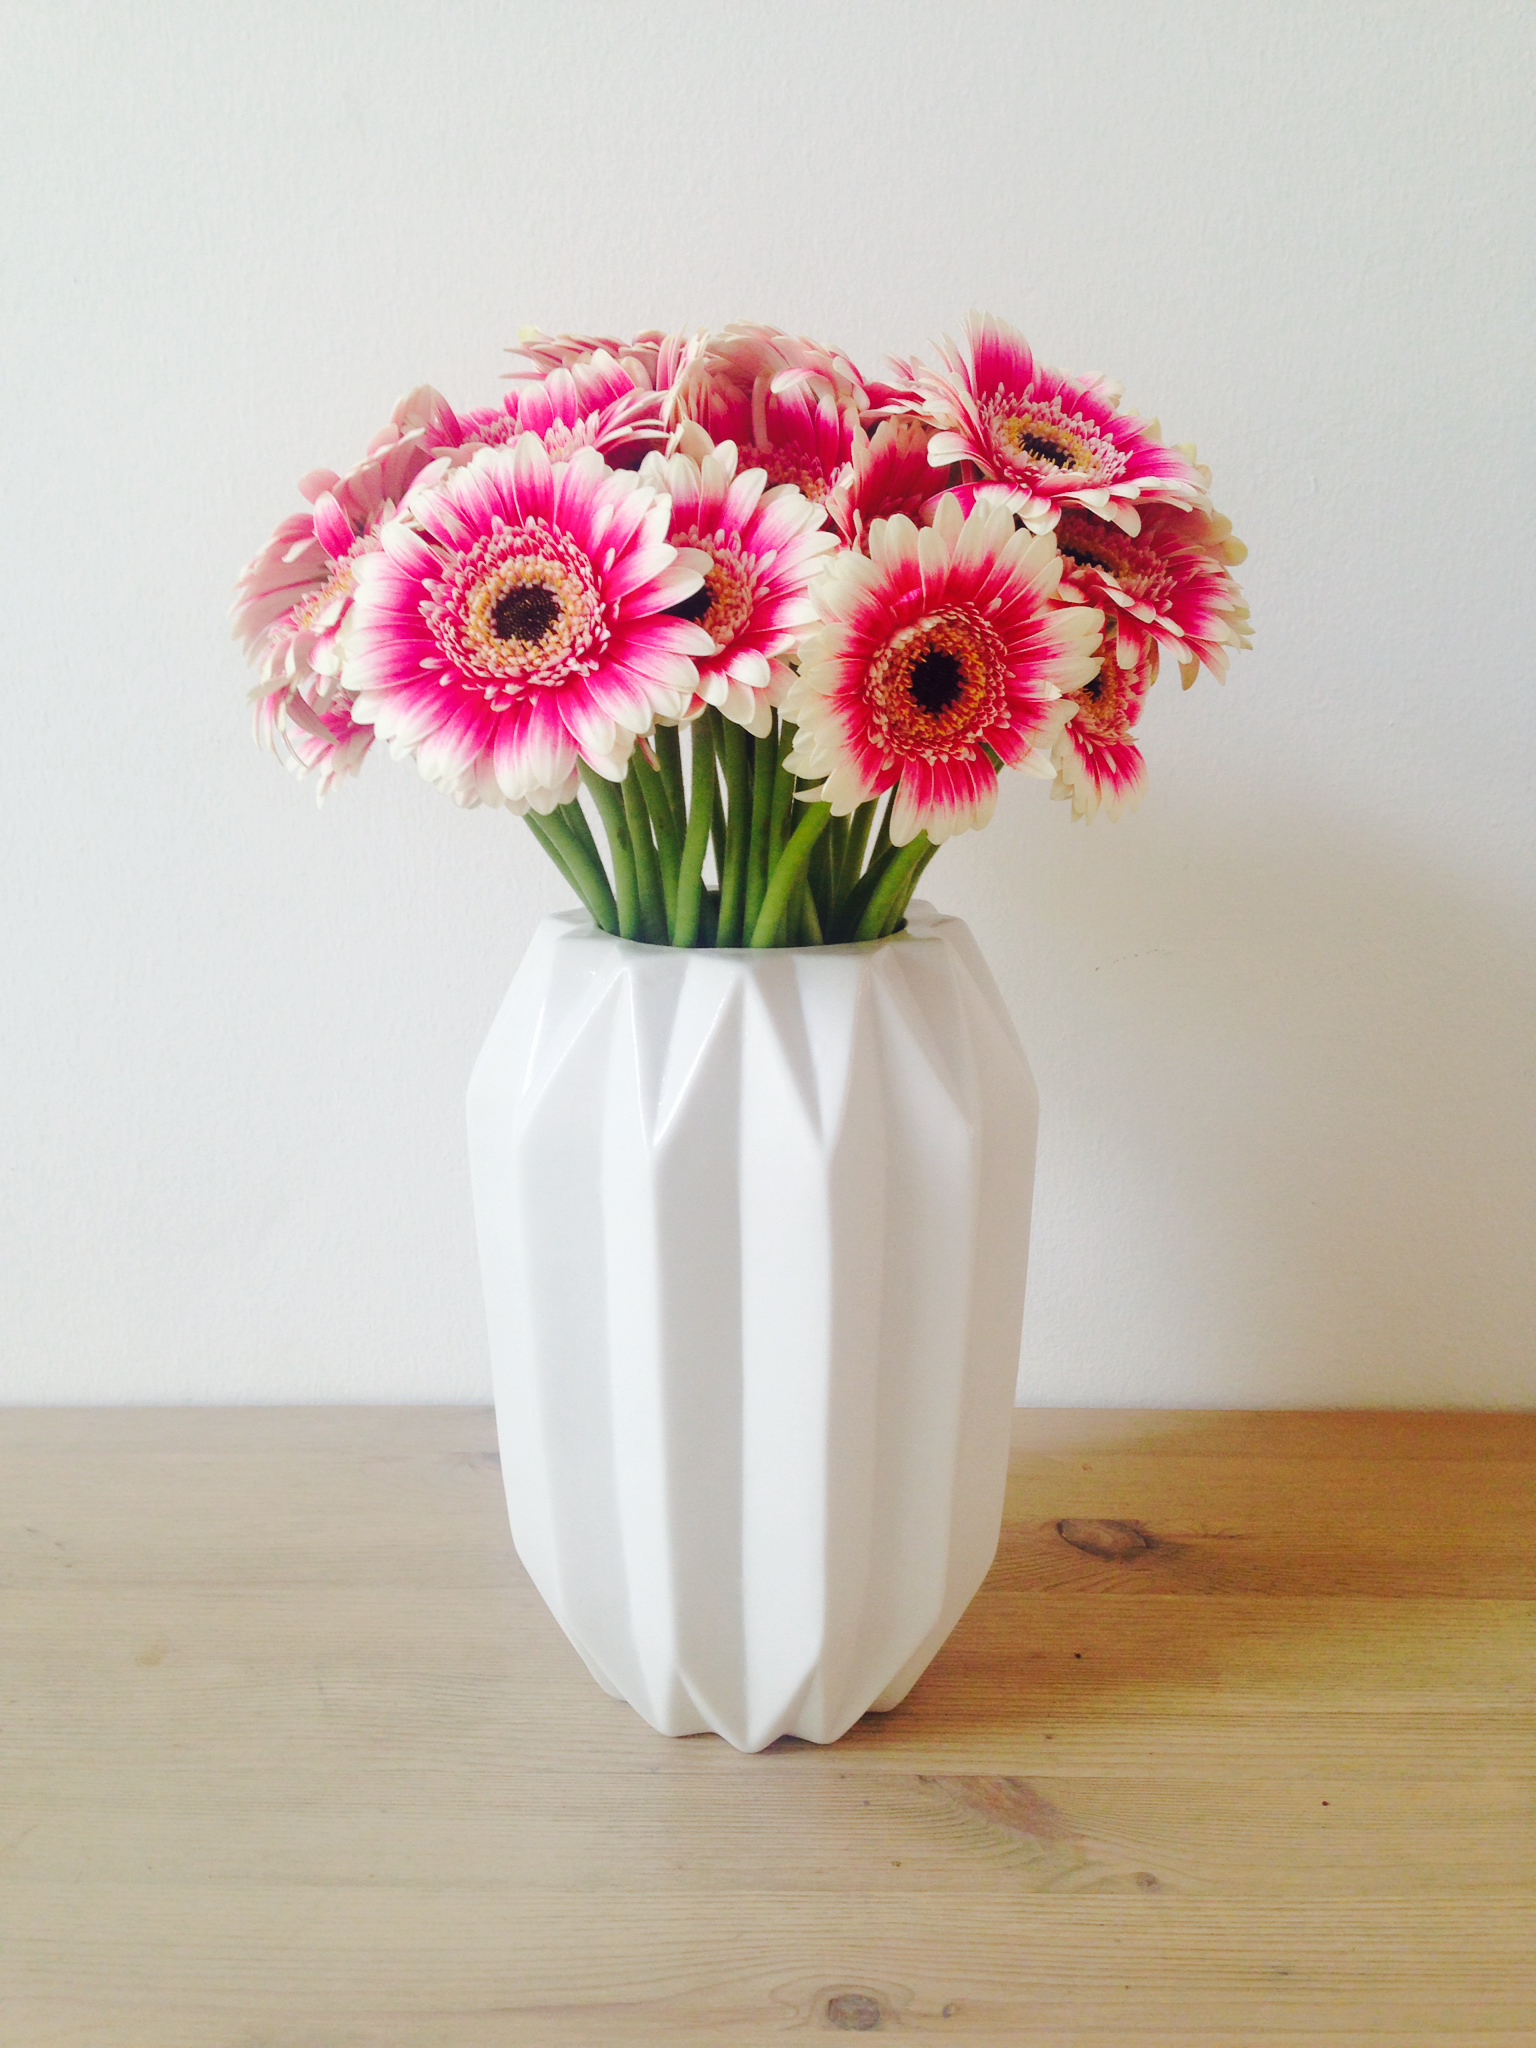 VASE ARRANGEMENTS Bloomy Blog Flower tips and more - VASE ARRANGEMENTS -  |  Flower tips and more